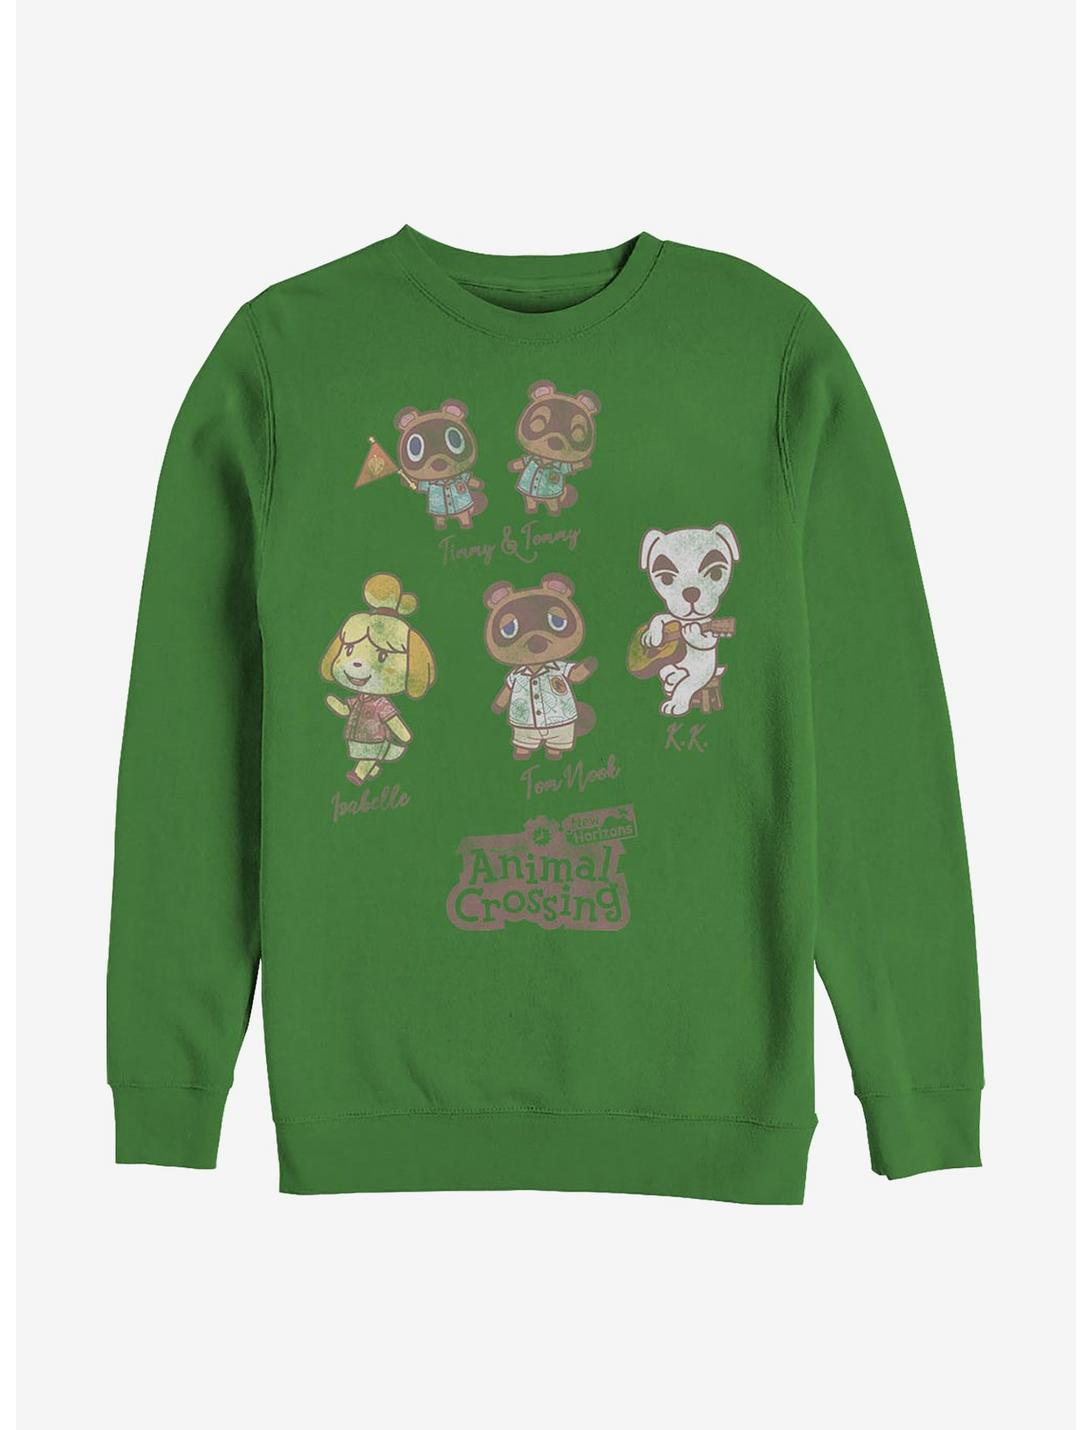 Nintendo Animal Crossing Character Textbook Crew Sweatshirt, KELLY, hi-res